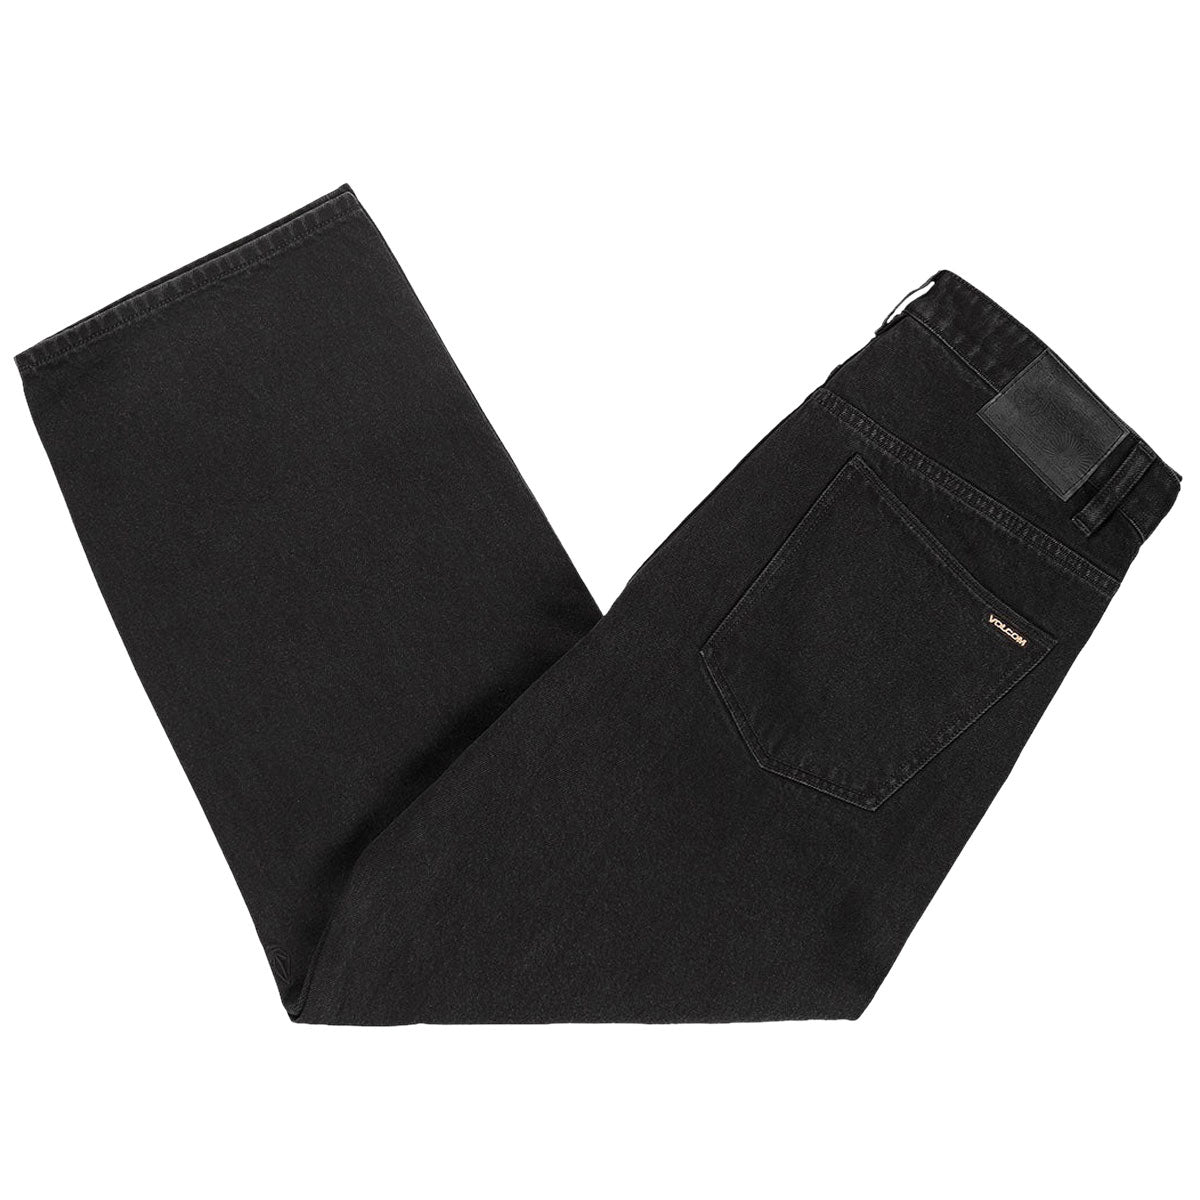 Volcom Billow Denim Jeans - Black image 3